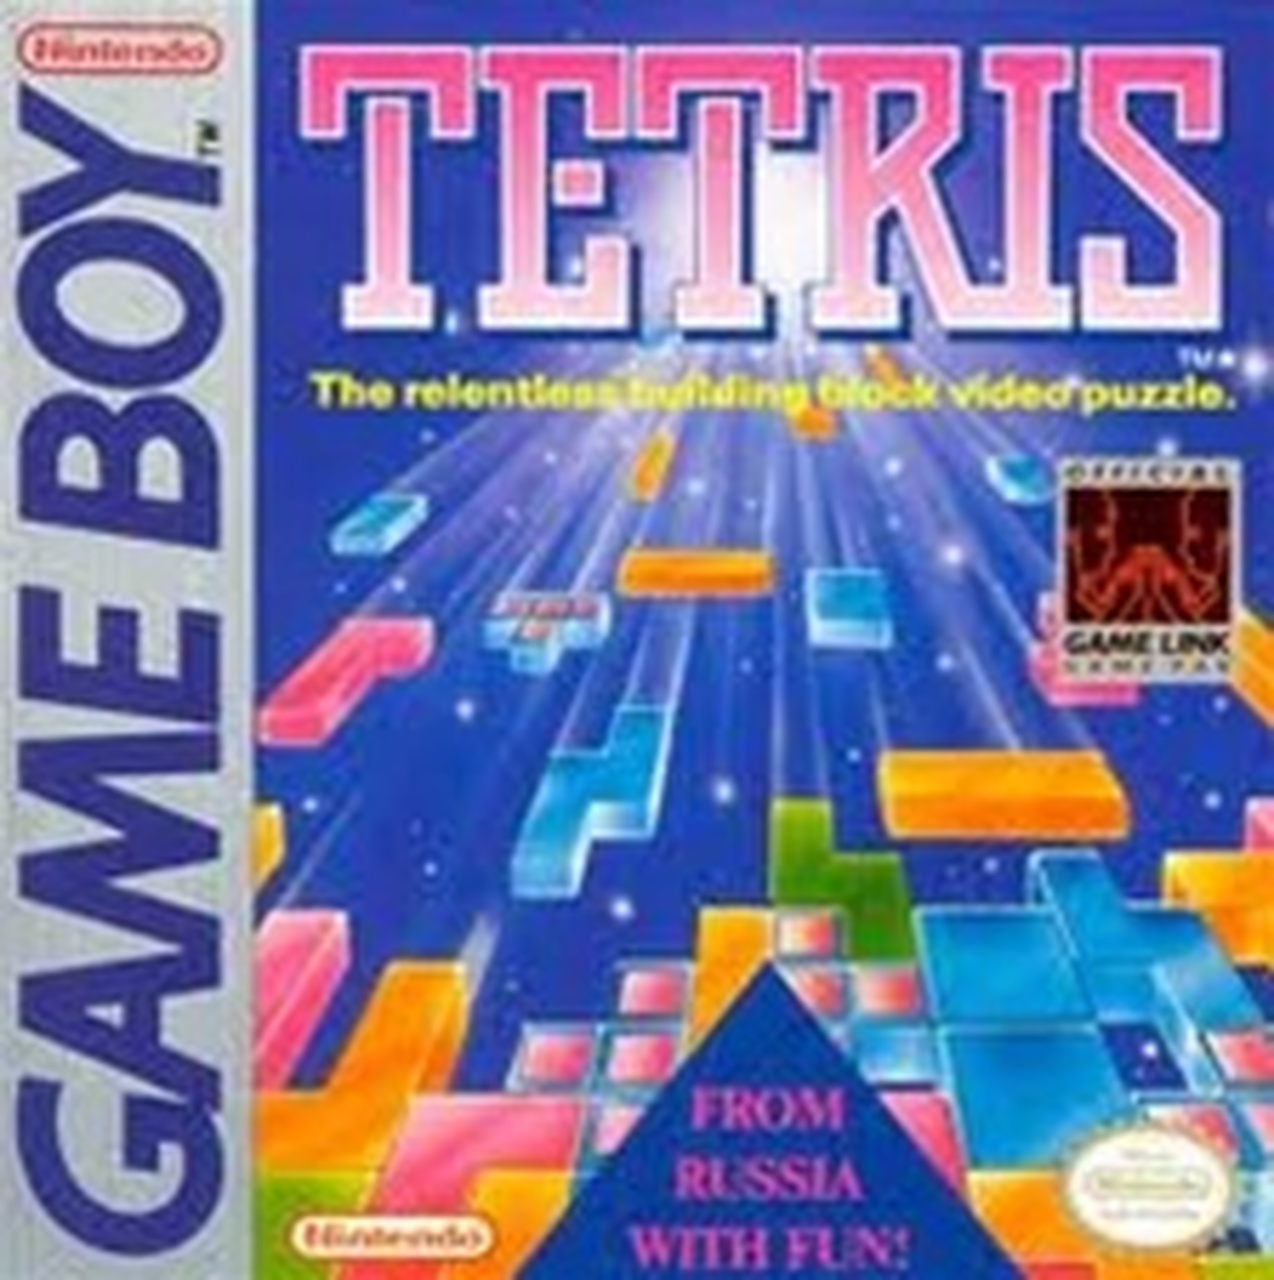 Tetris | Videogame soundtracks Wiki | Fandom